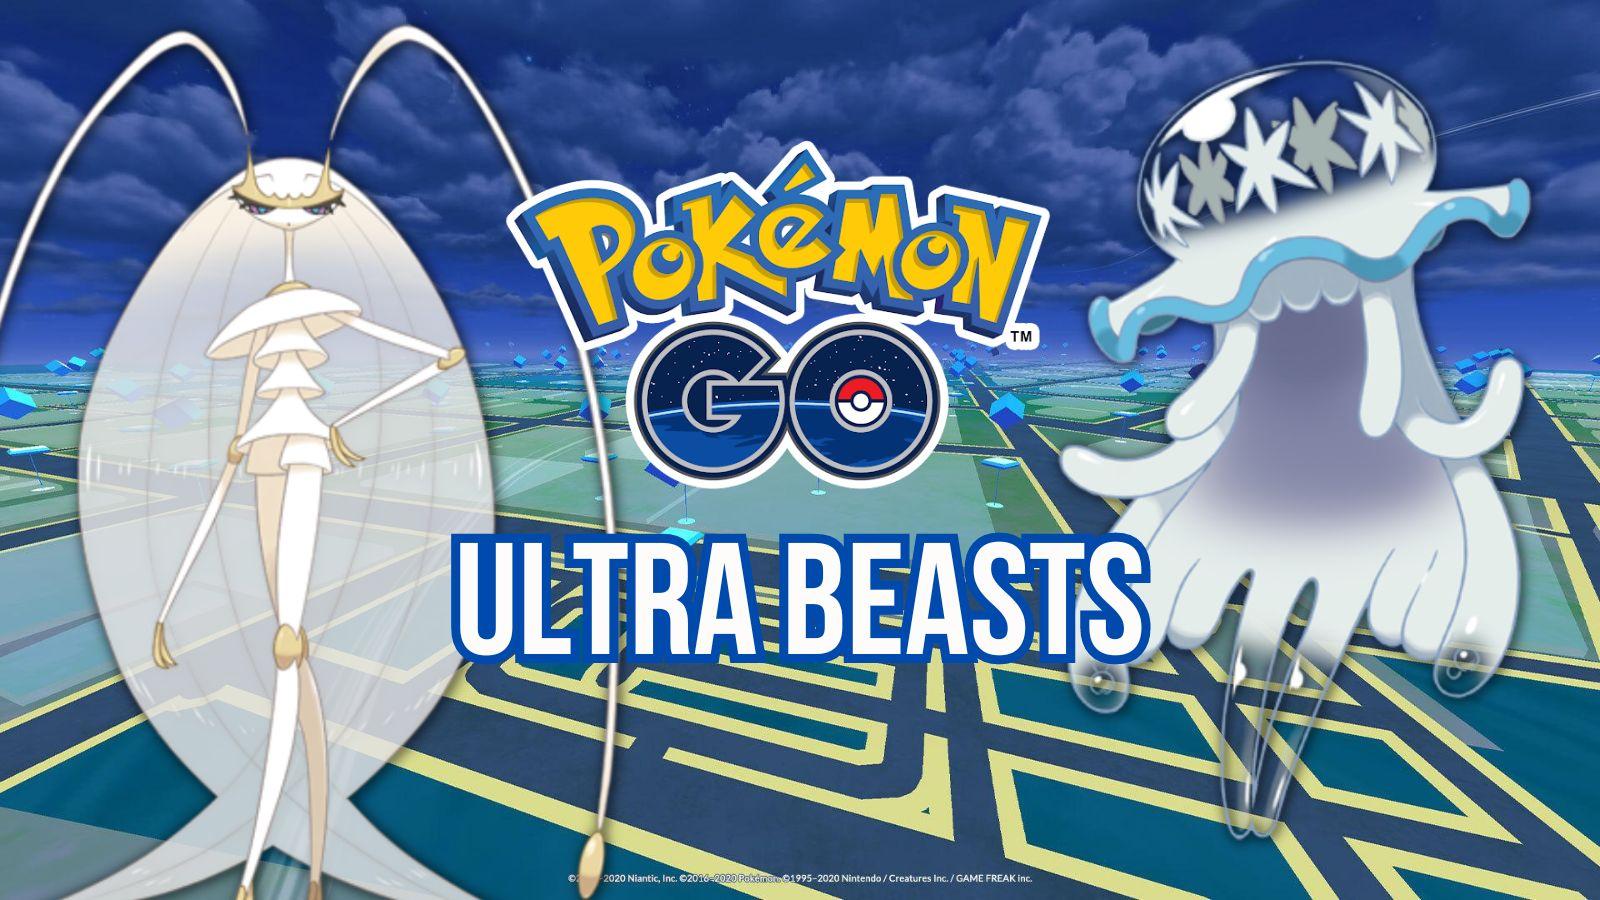 Pokemon GO: Ultra Beast Pokemon Have Arrived!